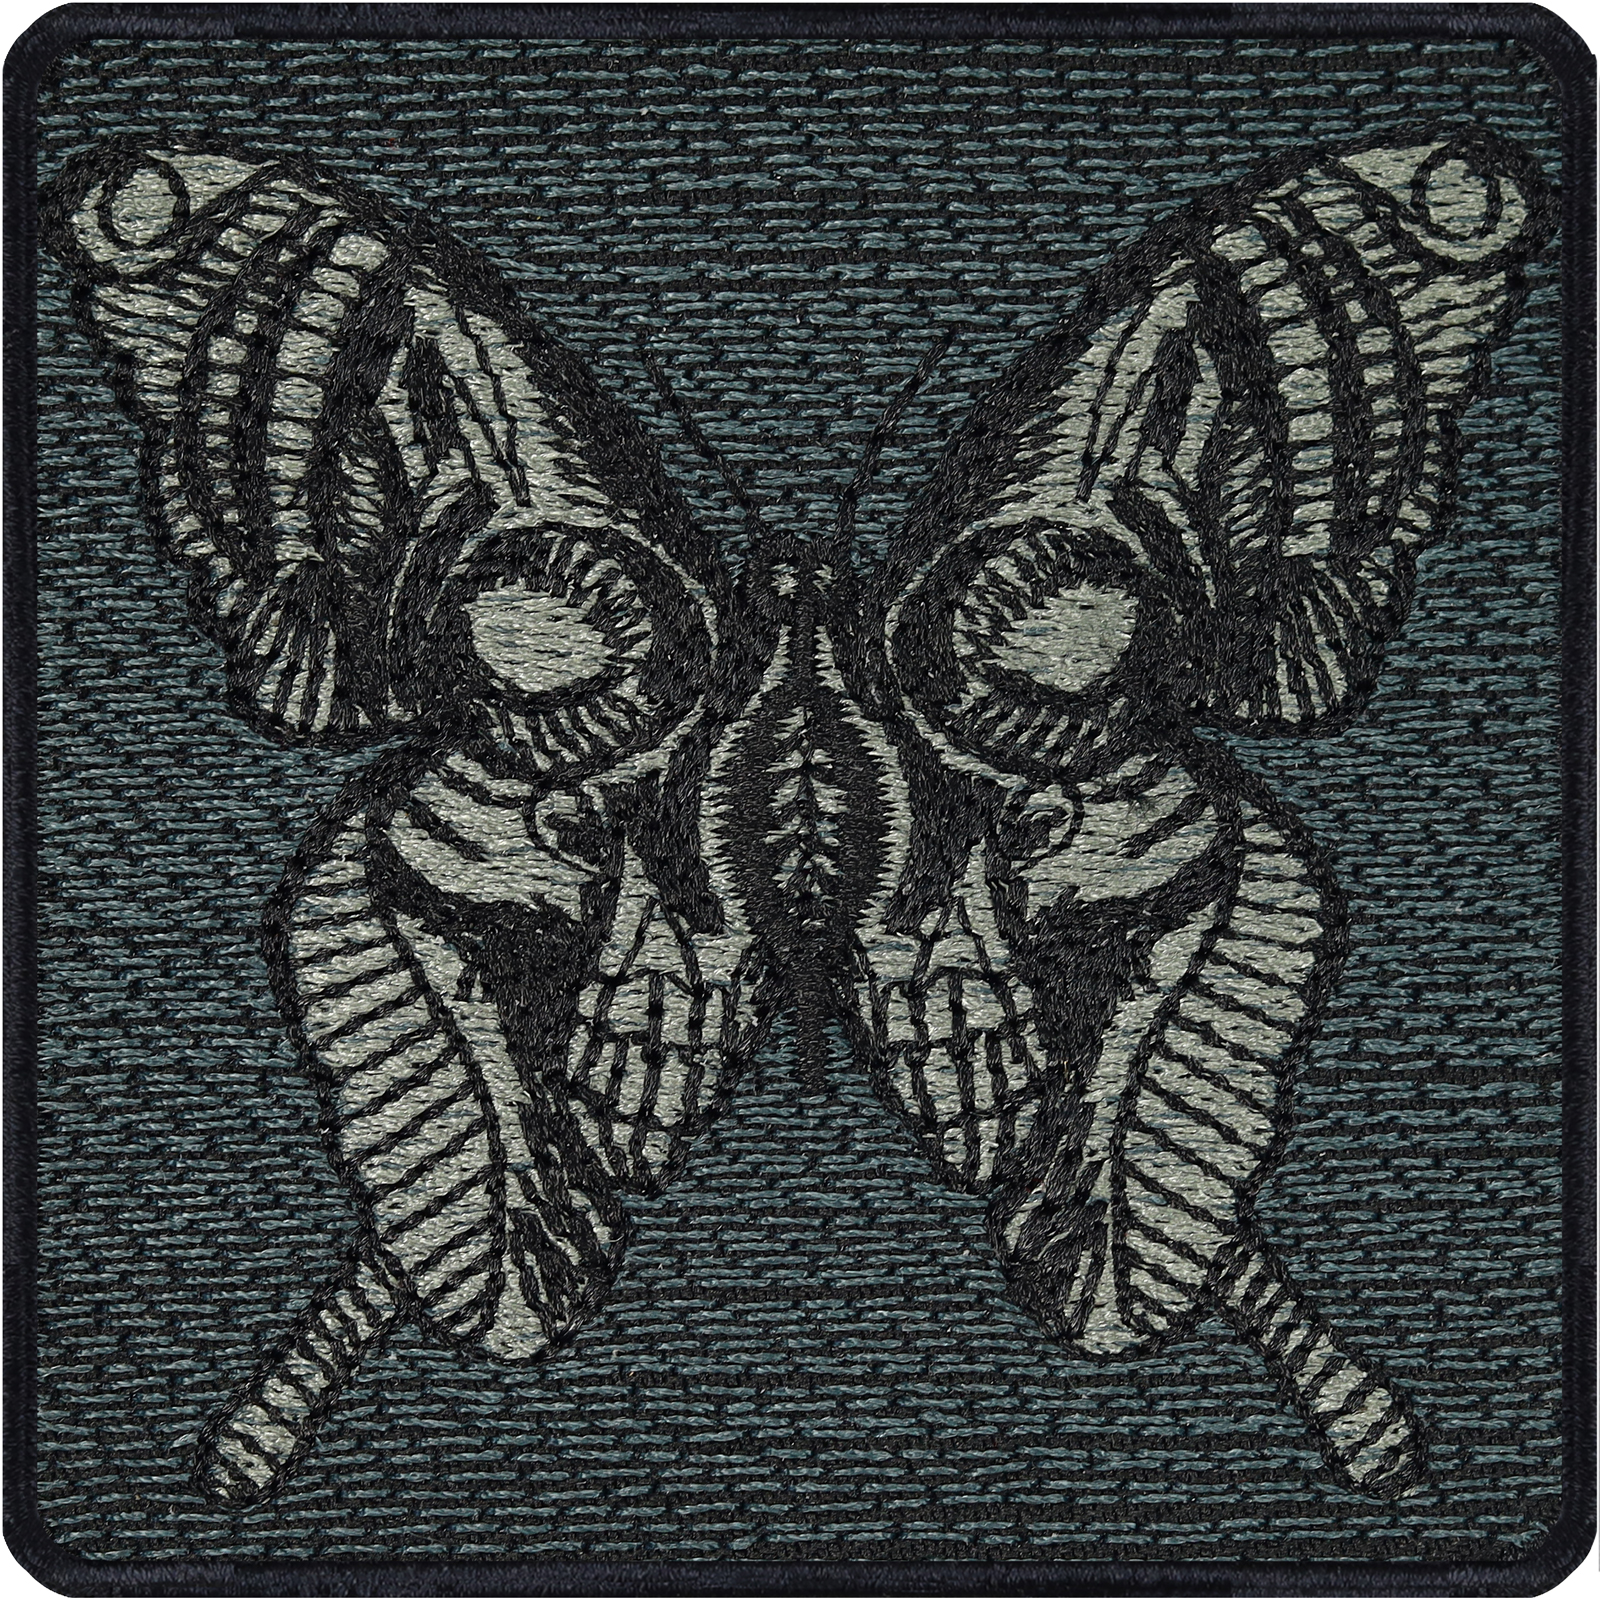 Butterfly-Skull - Patch